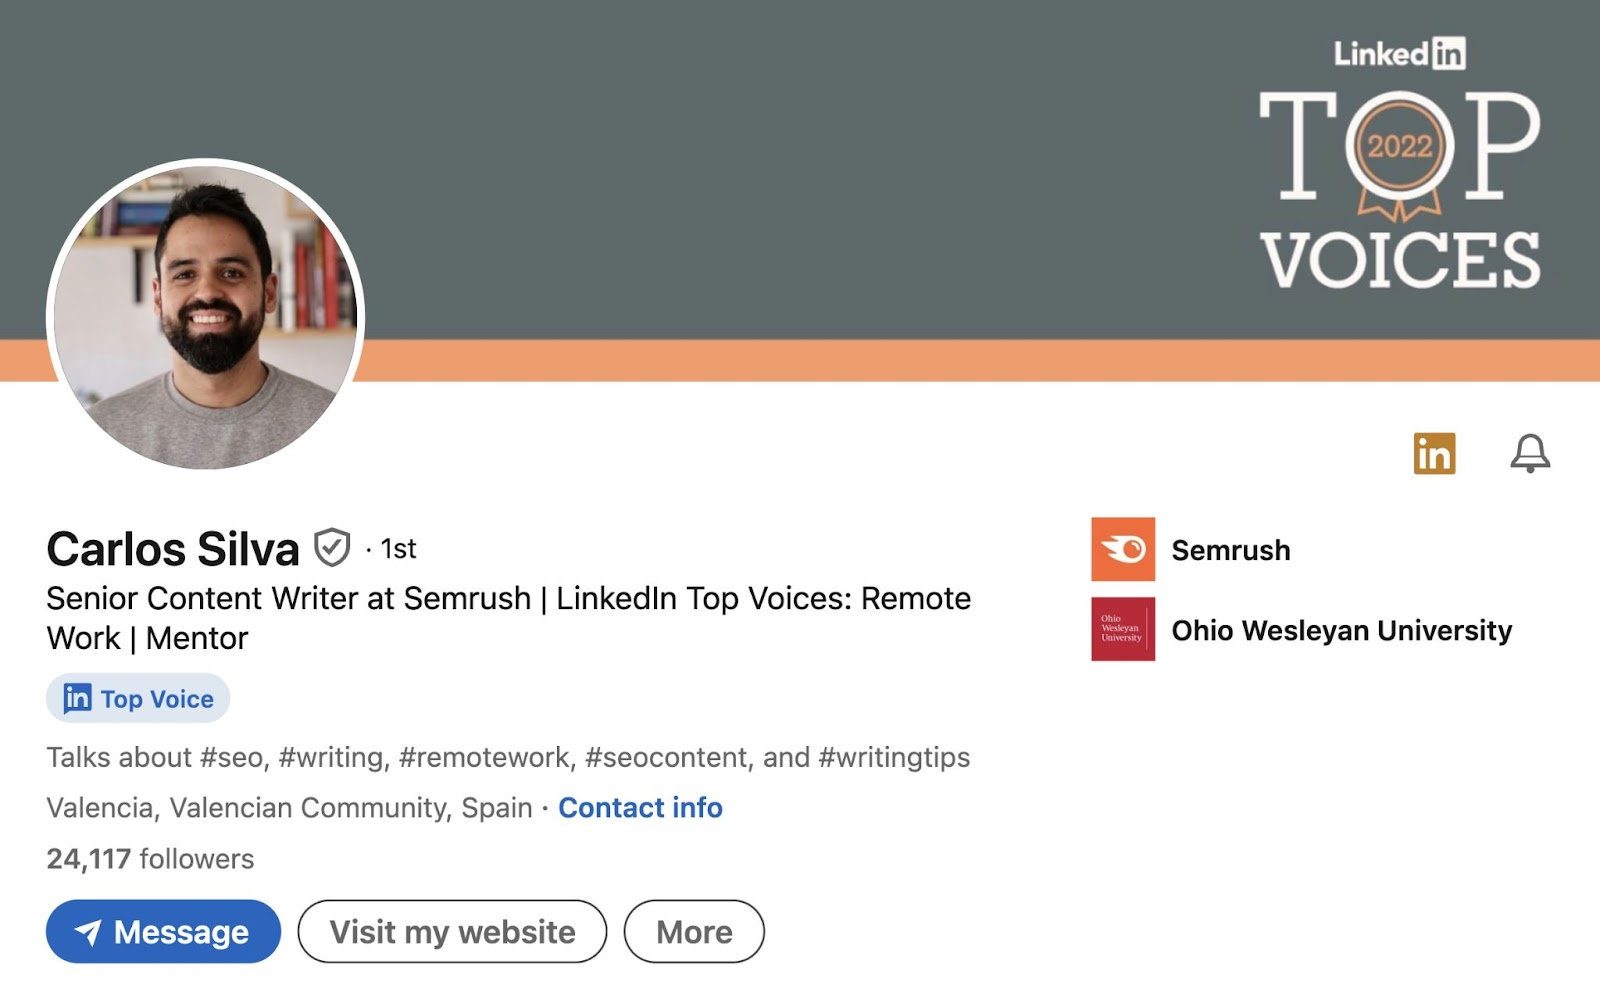 Semrush Senior Content Writer Carlos Silva’s LinkedIn profile